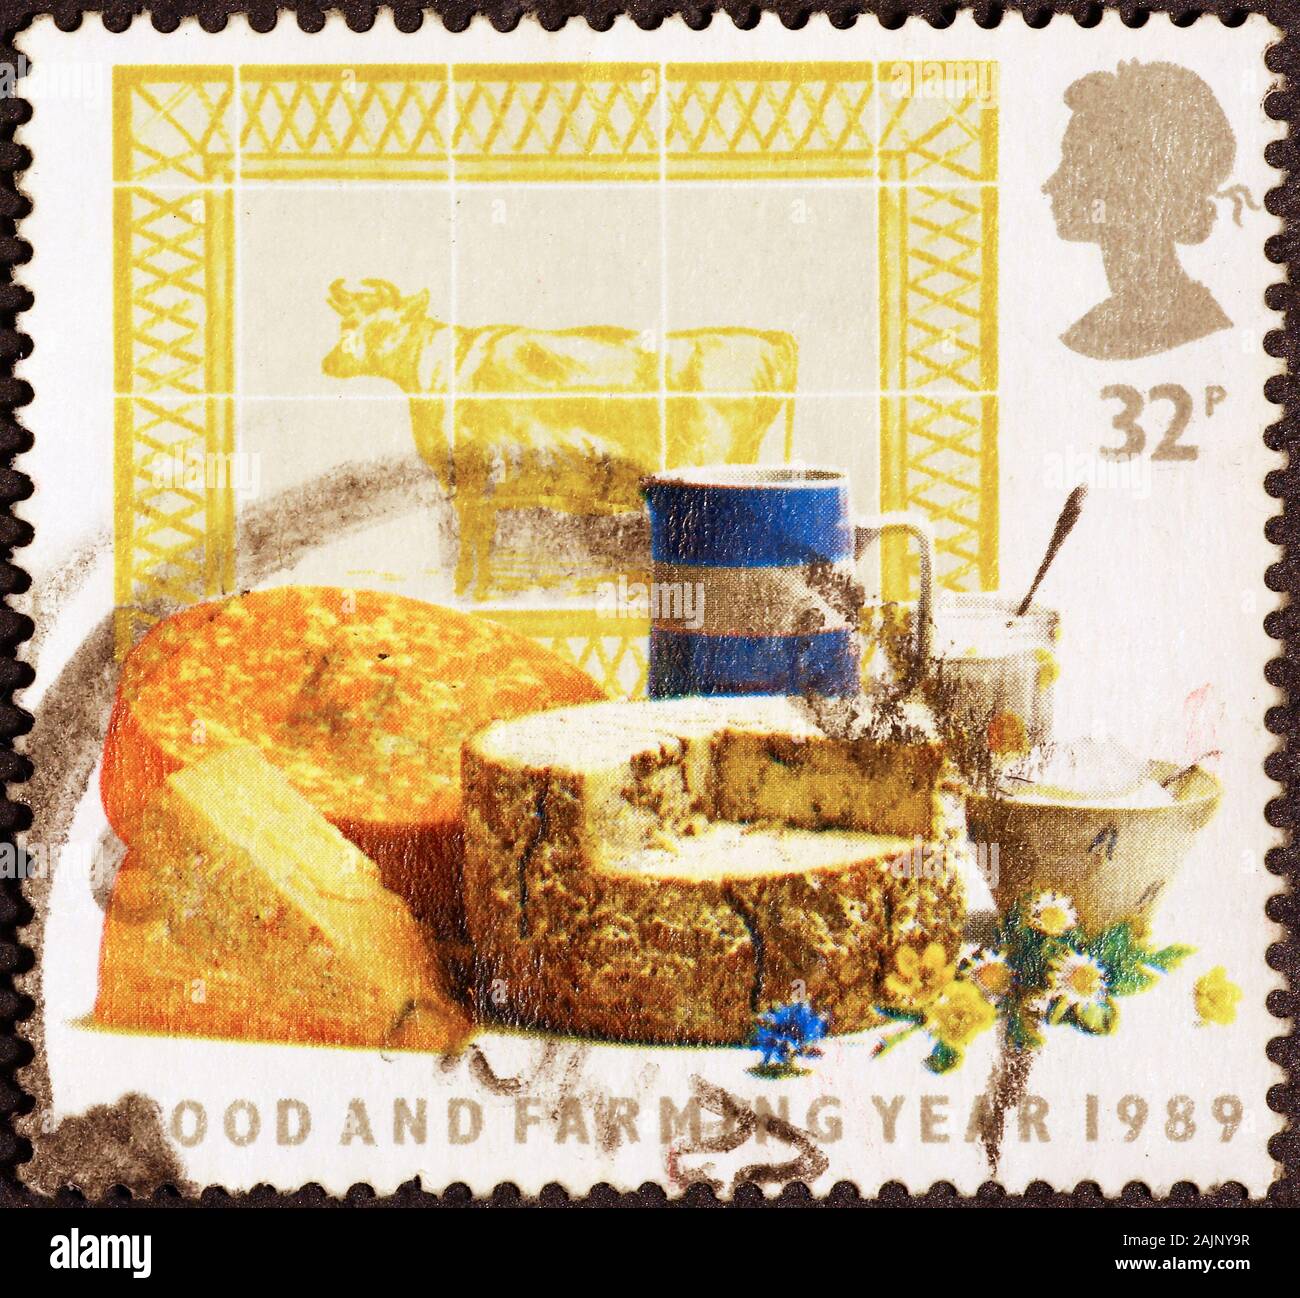 British cheese on postage stamp Stock Photo